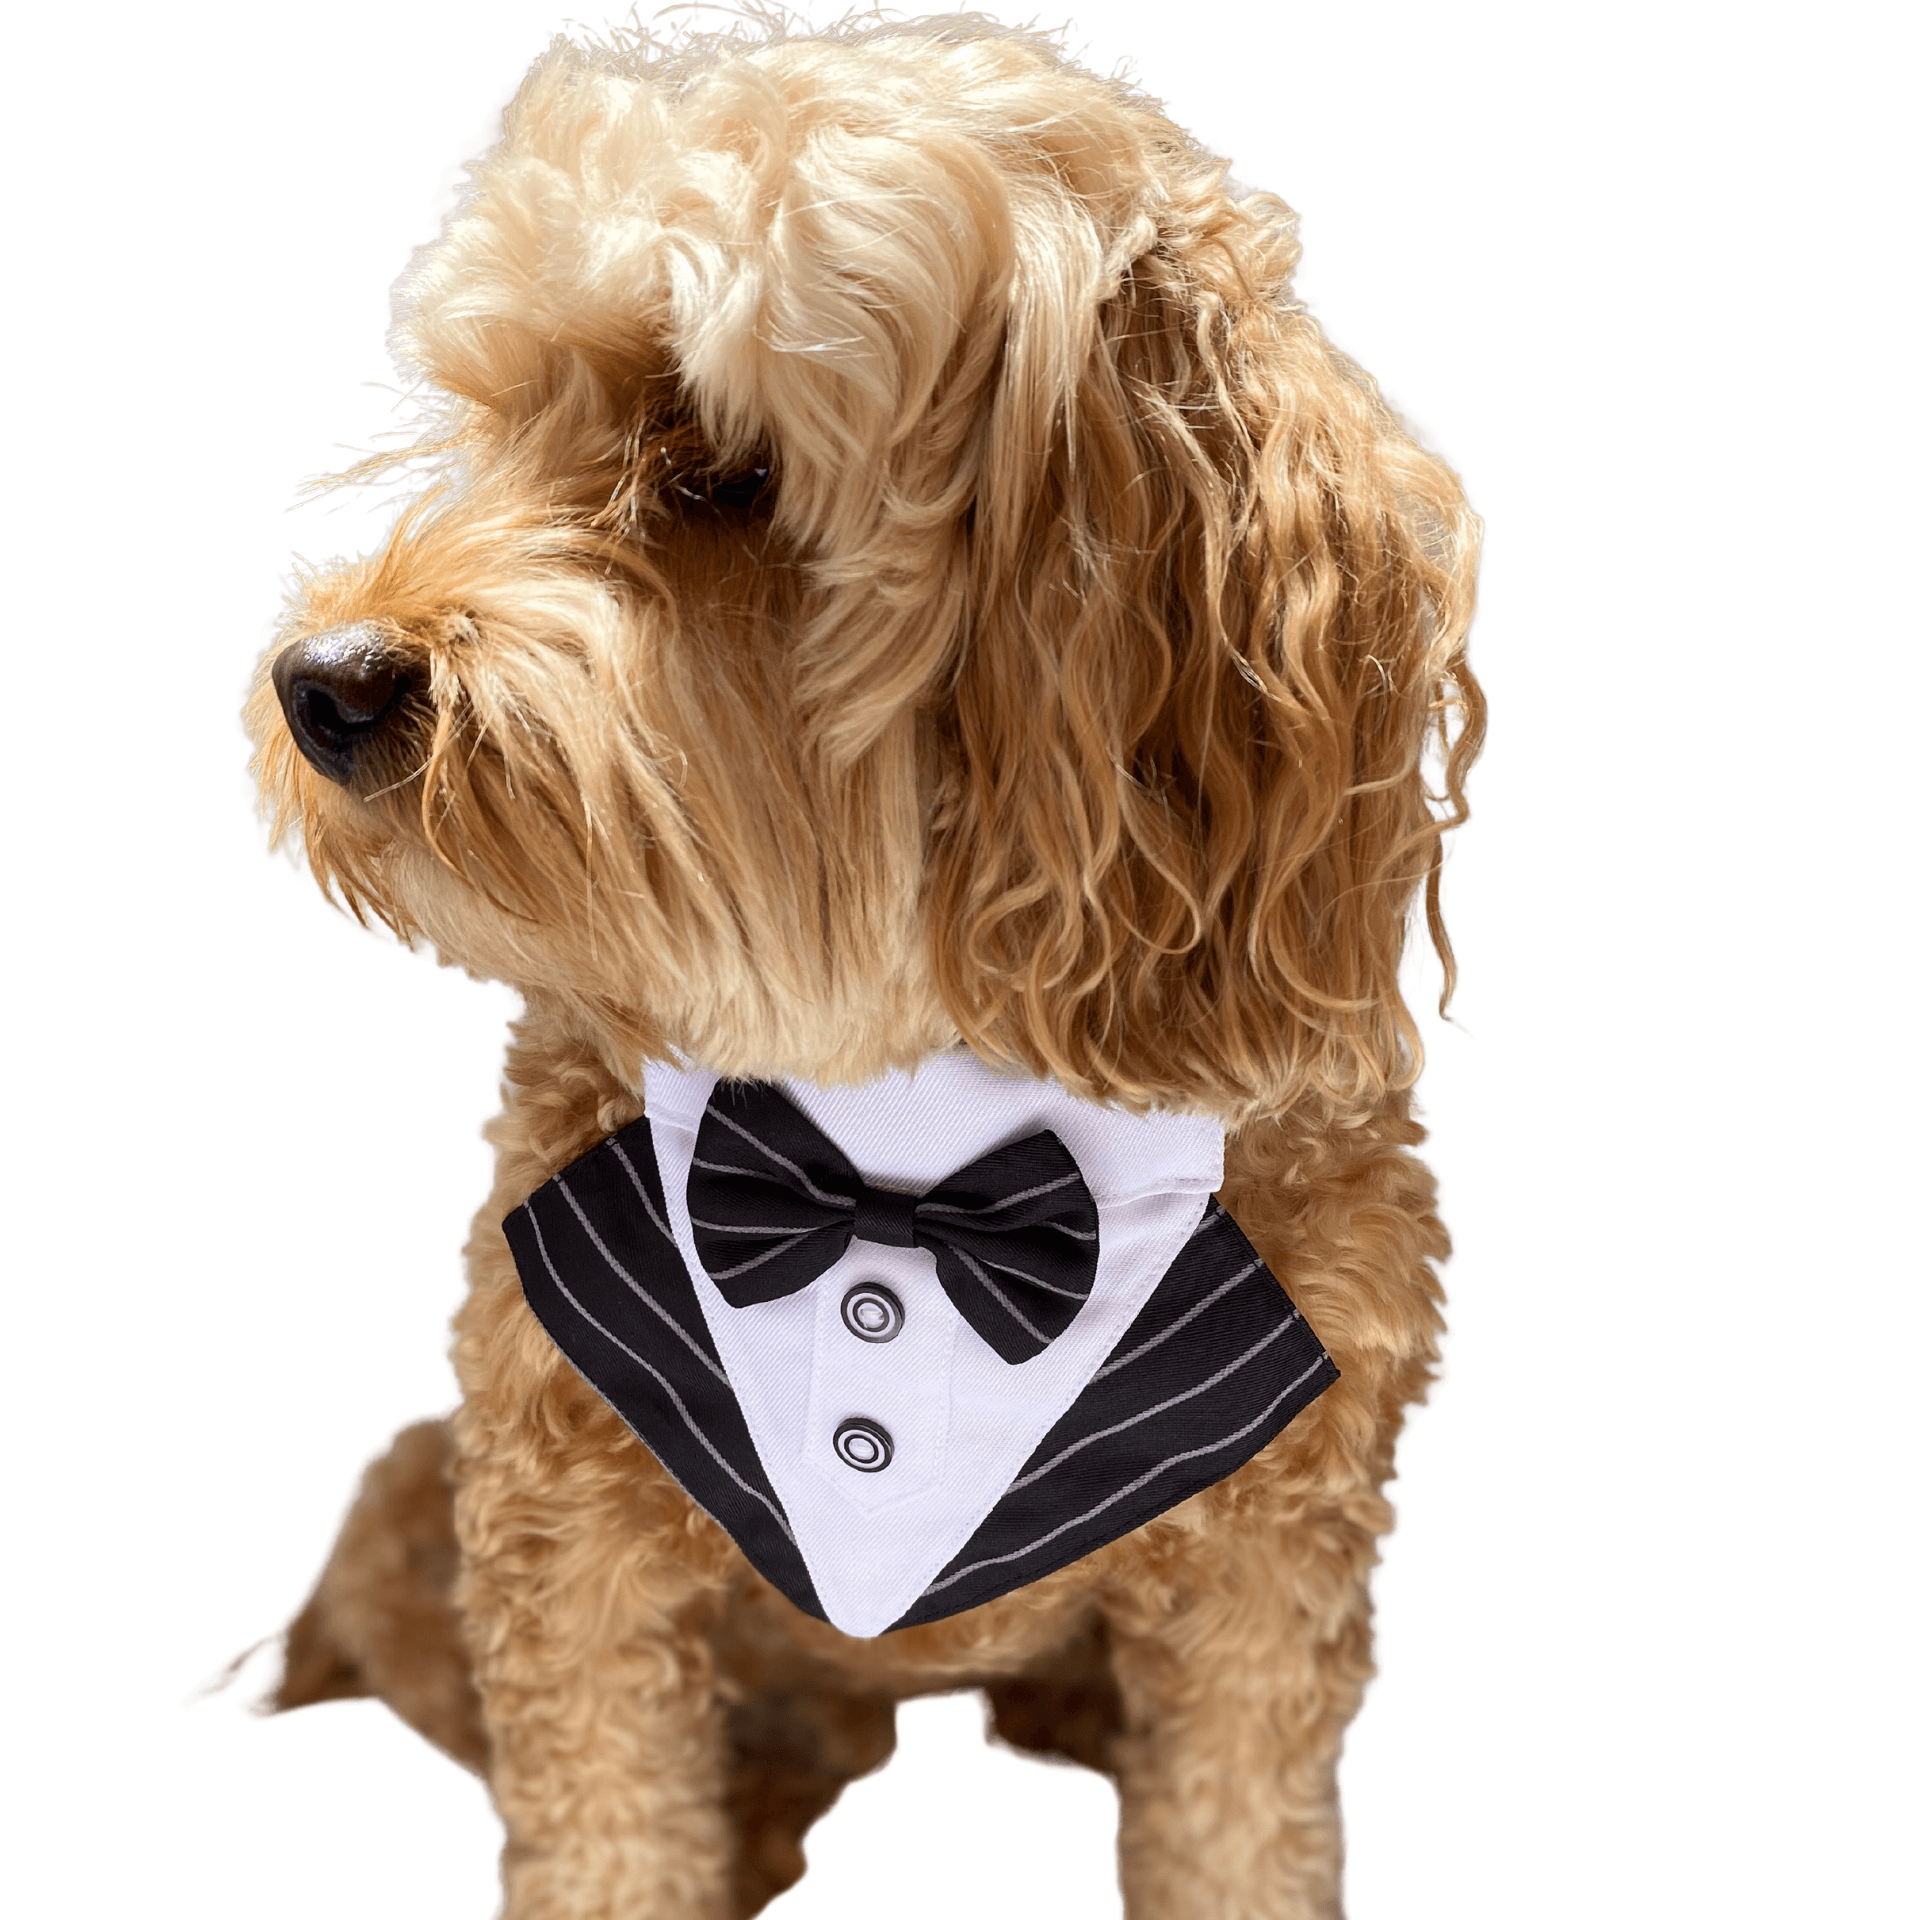 Pinstripe dog bandana fashion accessory furbaby Australia